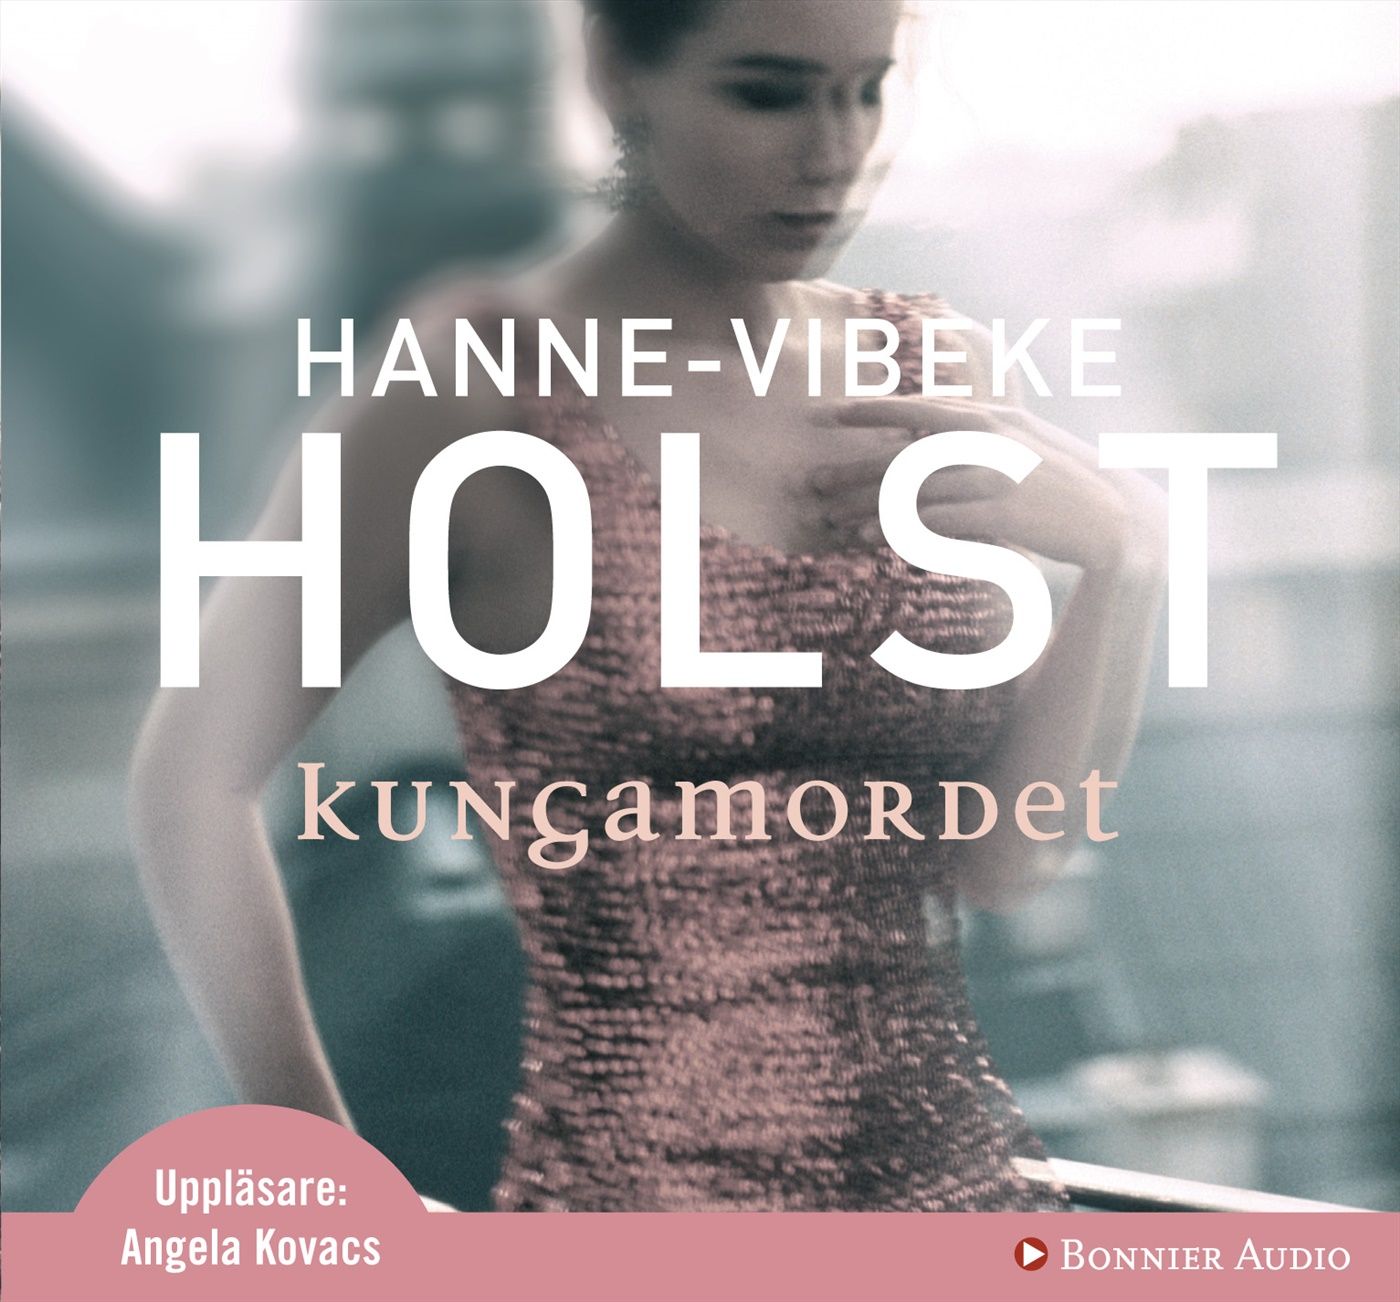 Kungamordet, audiobook by Hanne-Vibeke Holst